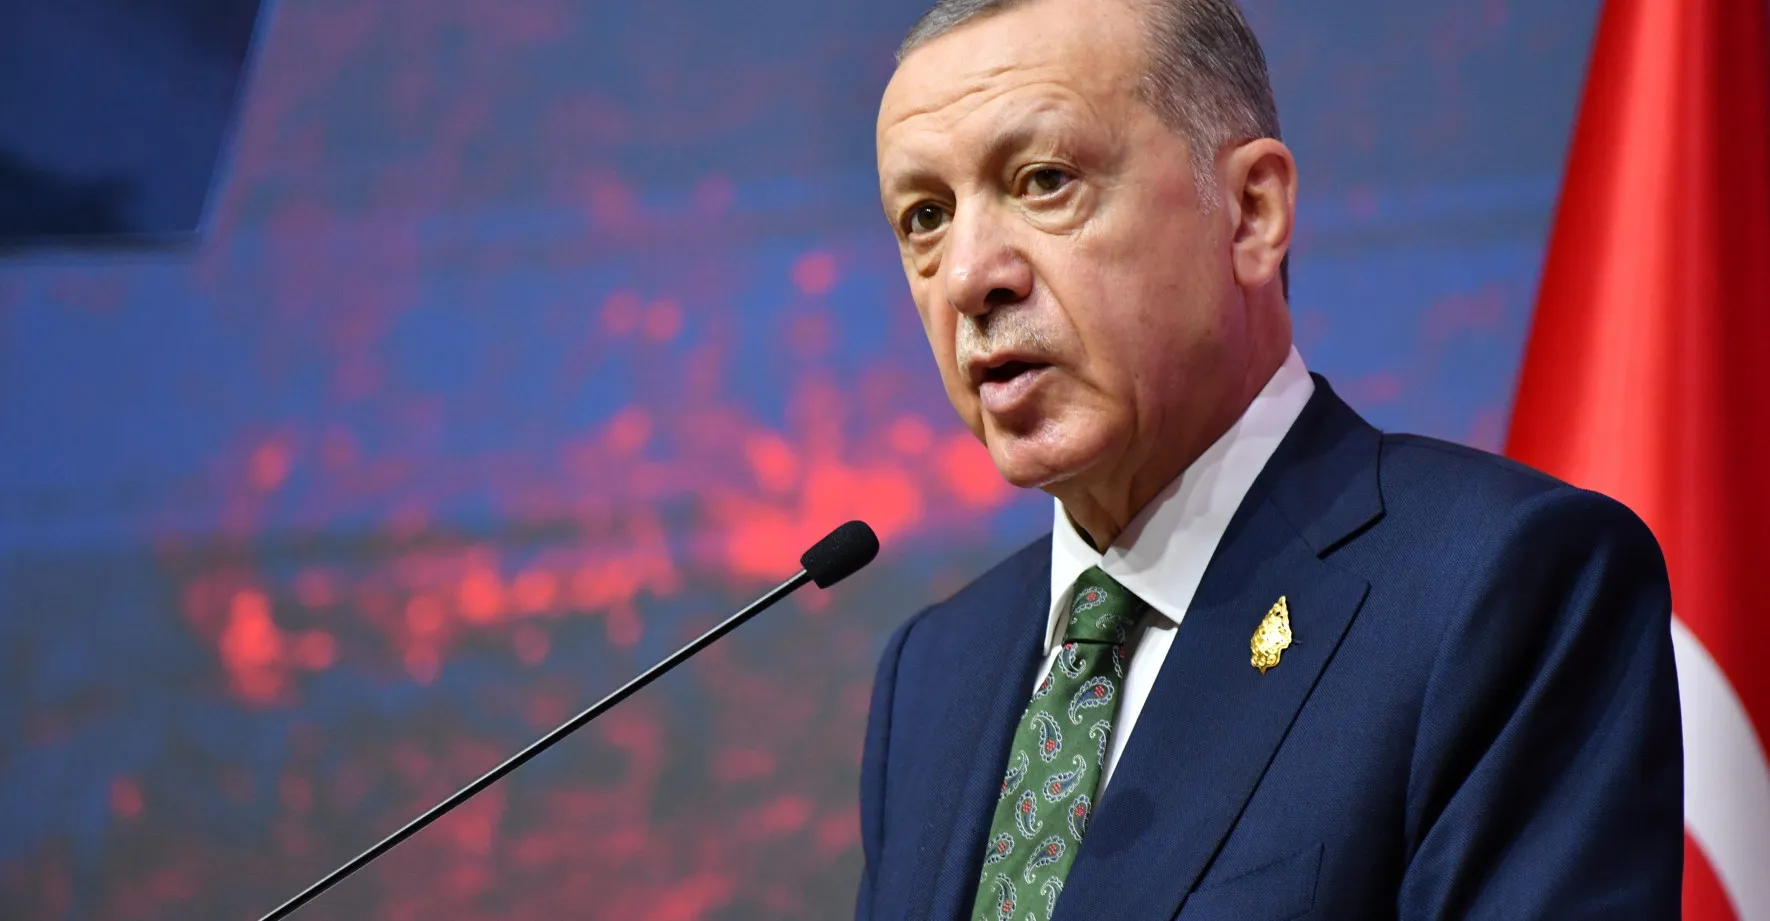 Šest stran proti Erdoganovi. Postavily společného kandidáta Kiliçdaroglua